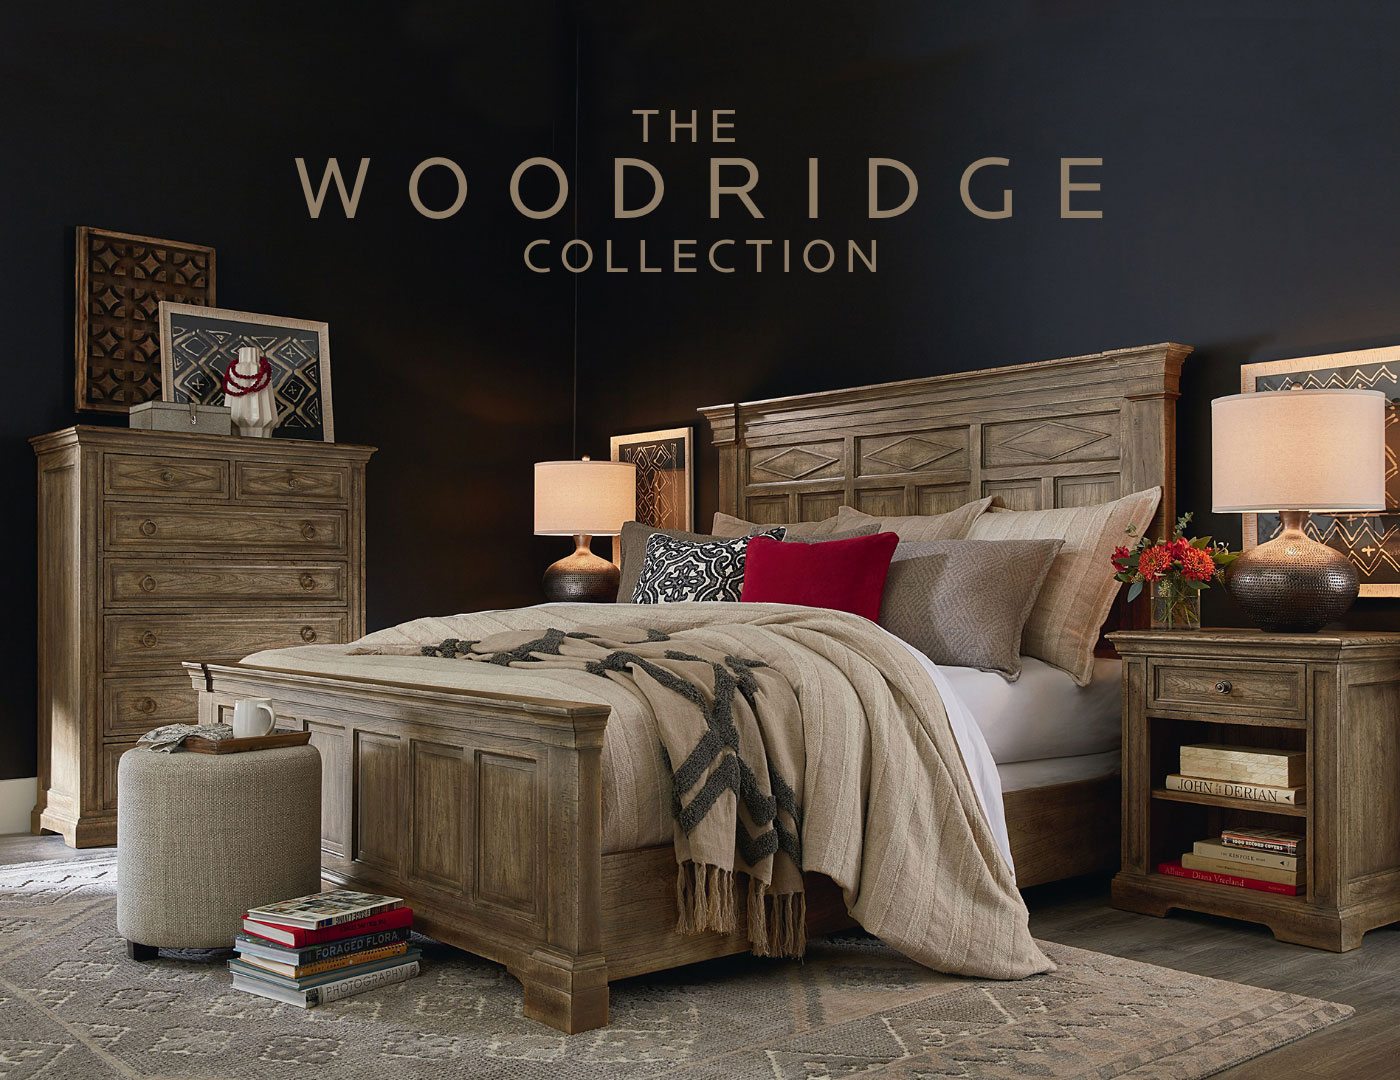 The Woodridge Collection